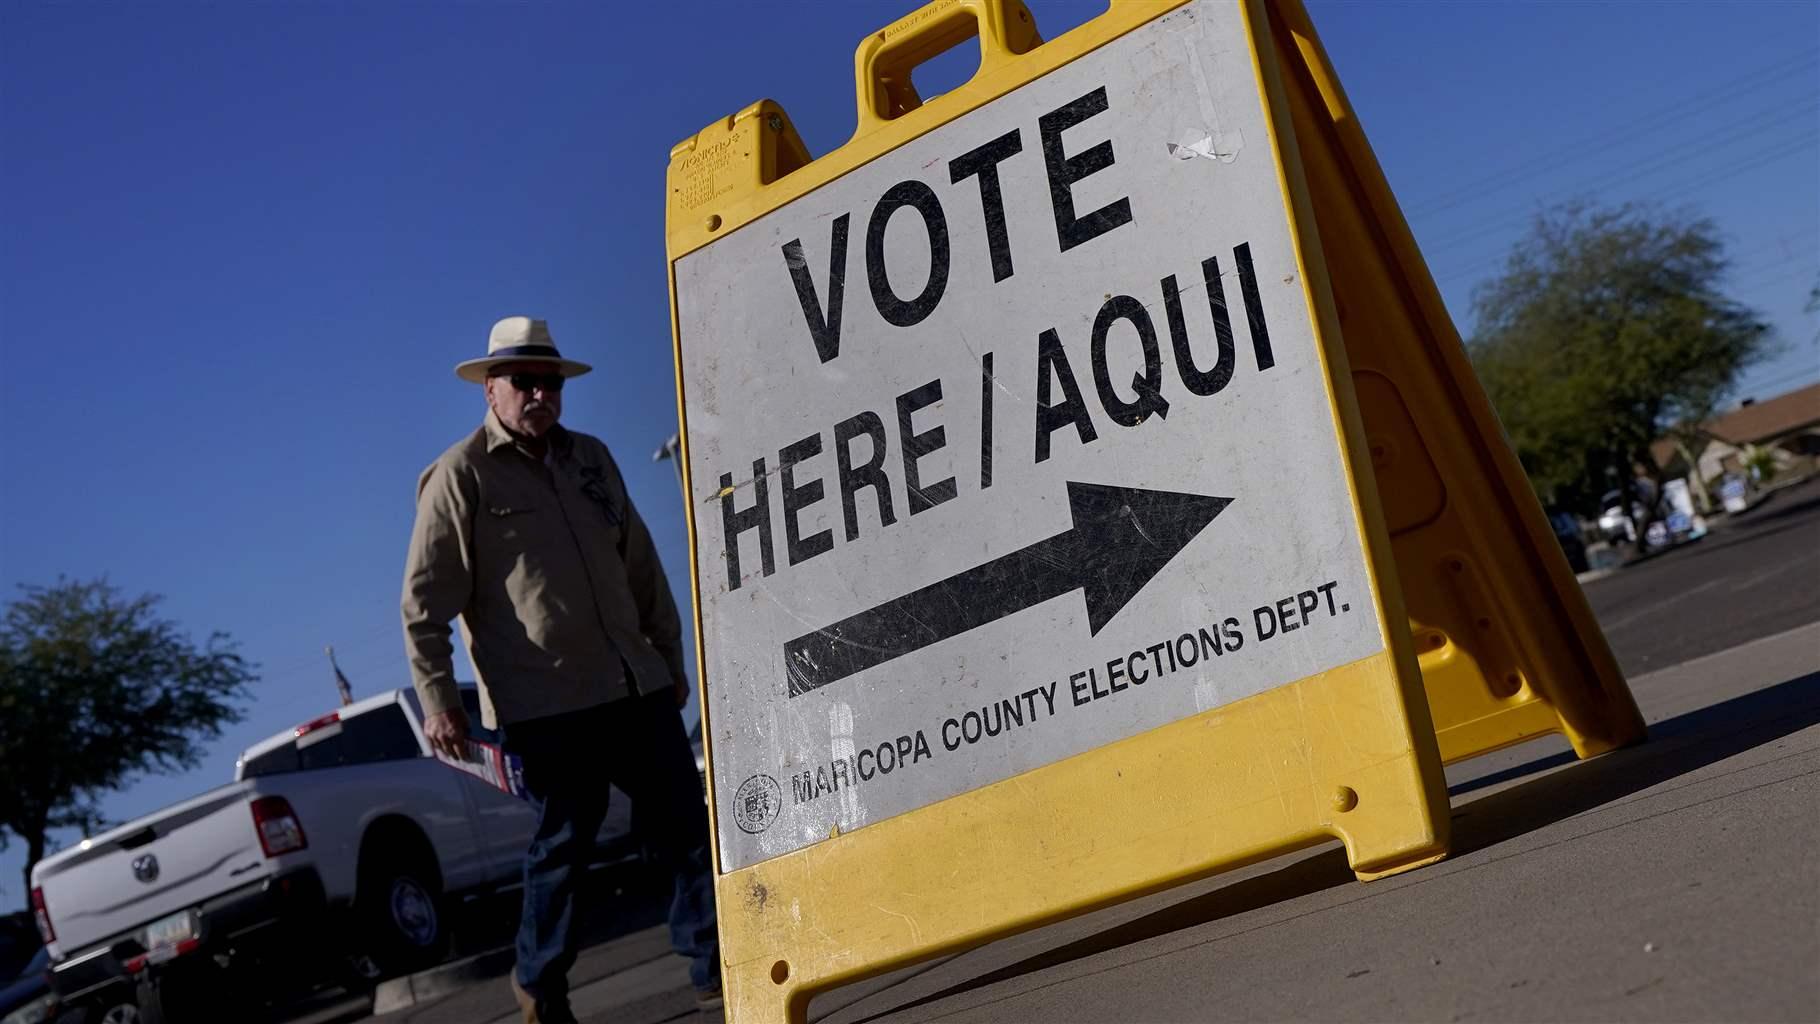 A voter arrives to cast his ballot at a precinct, Tuesday, Nov. 8, 2022, in Guadalupe, Ariz. (AP Photo/Matt York)